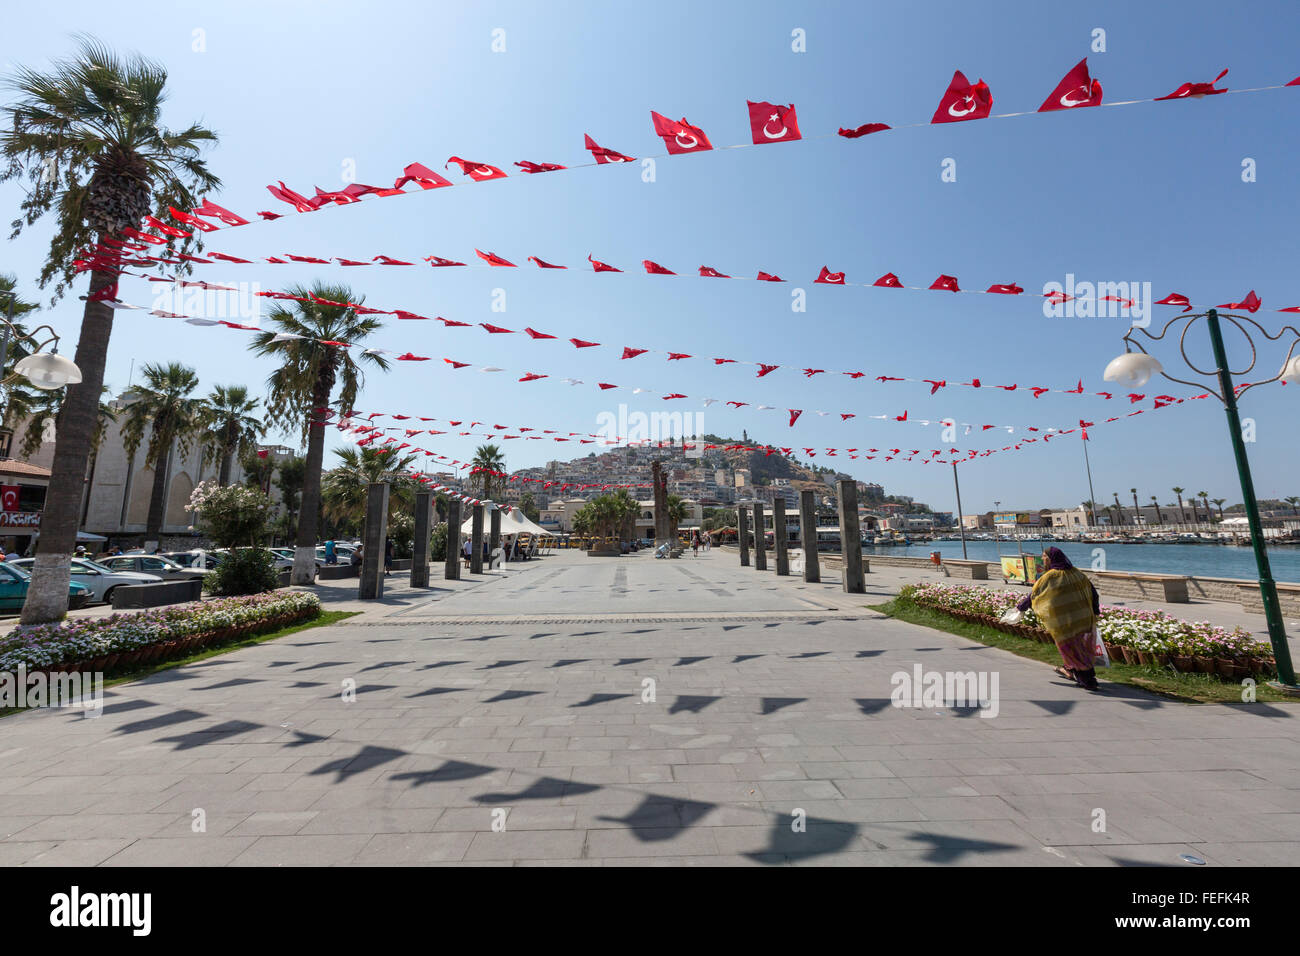 Small Turkish flags in Atatürk Boulevard in Kuşadası harbor, Turkey Stock Photo